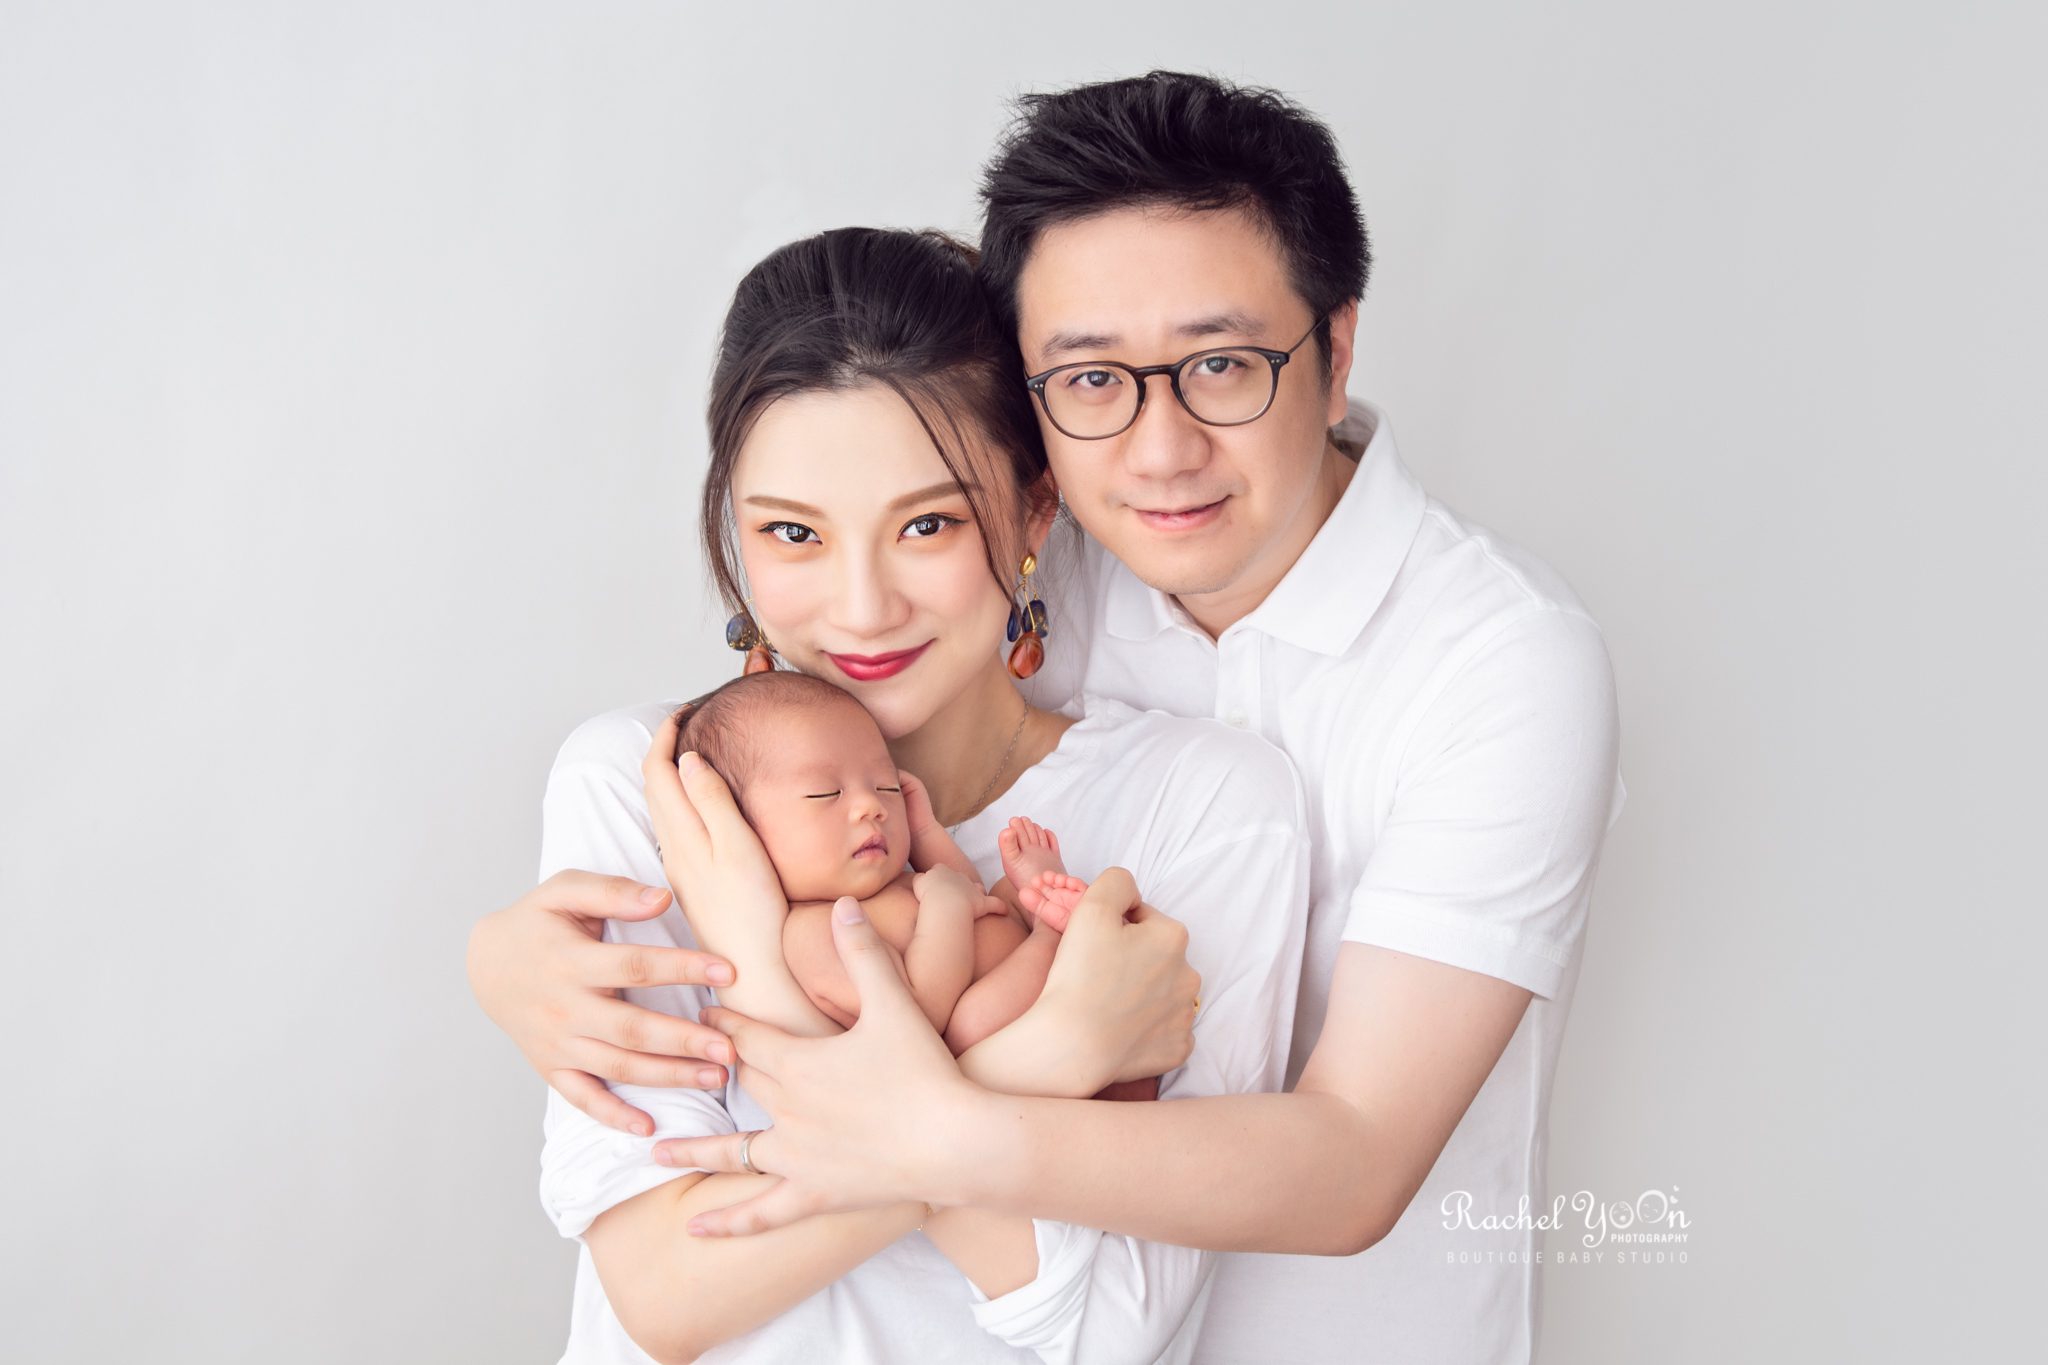 family photo - newborn photography vancouver